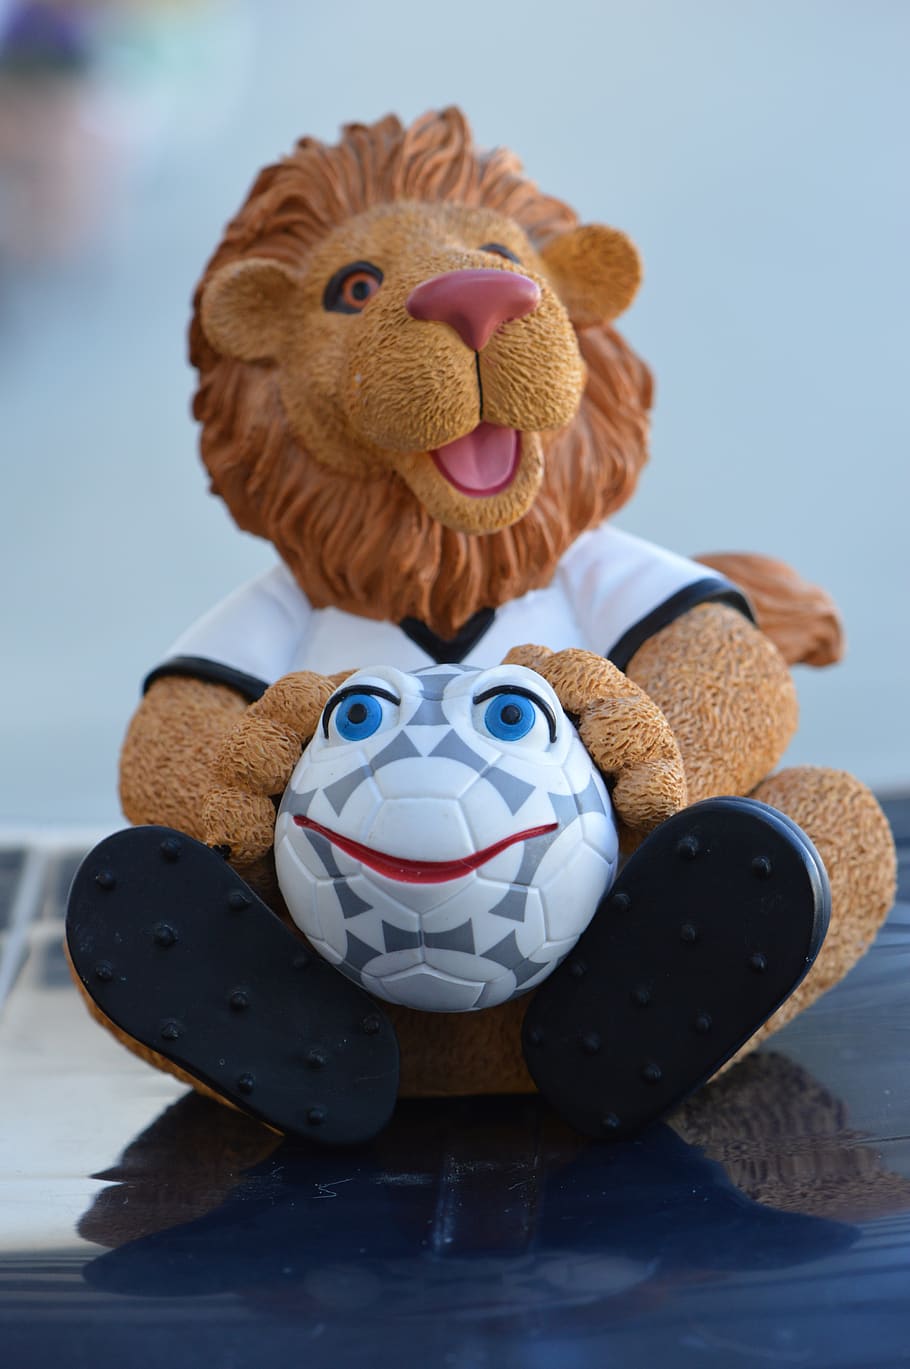 goleo, football, 2006, lion, world cup final 2006 berlin, world cup, representation, toy, stuffed toy, creativity